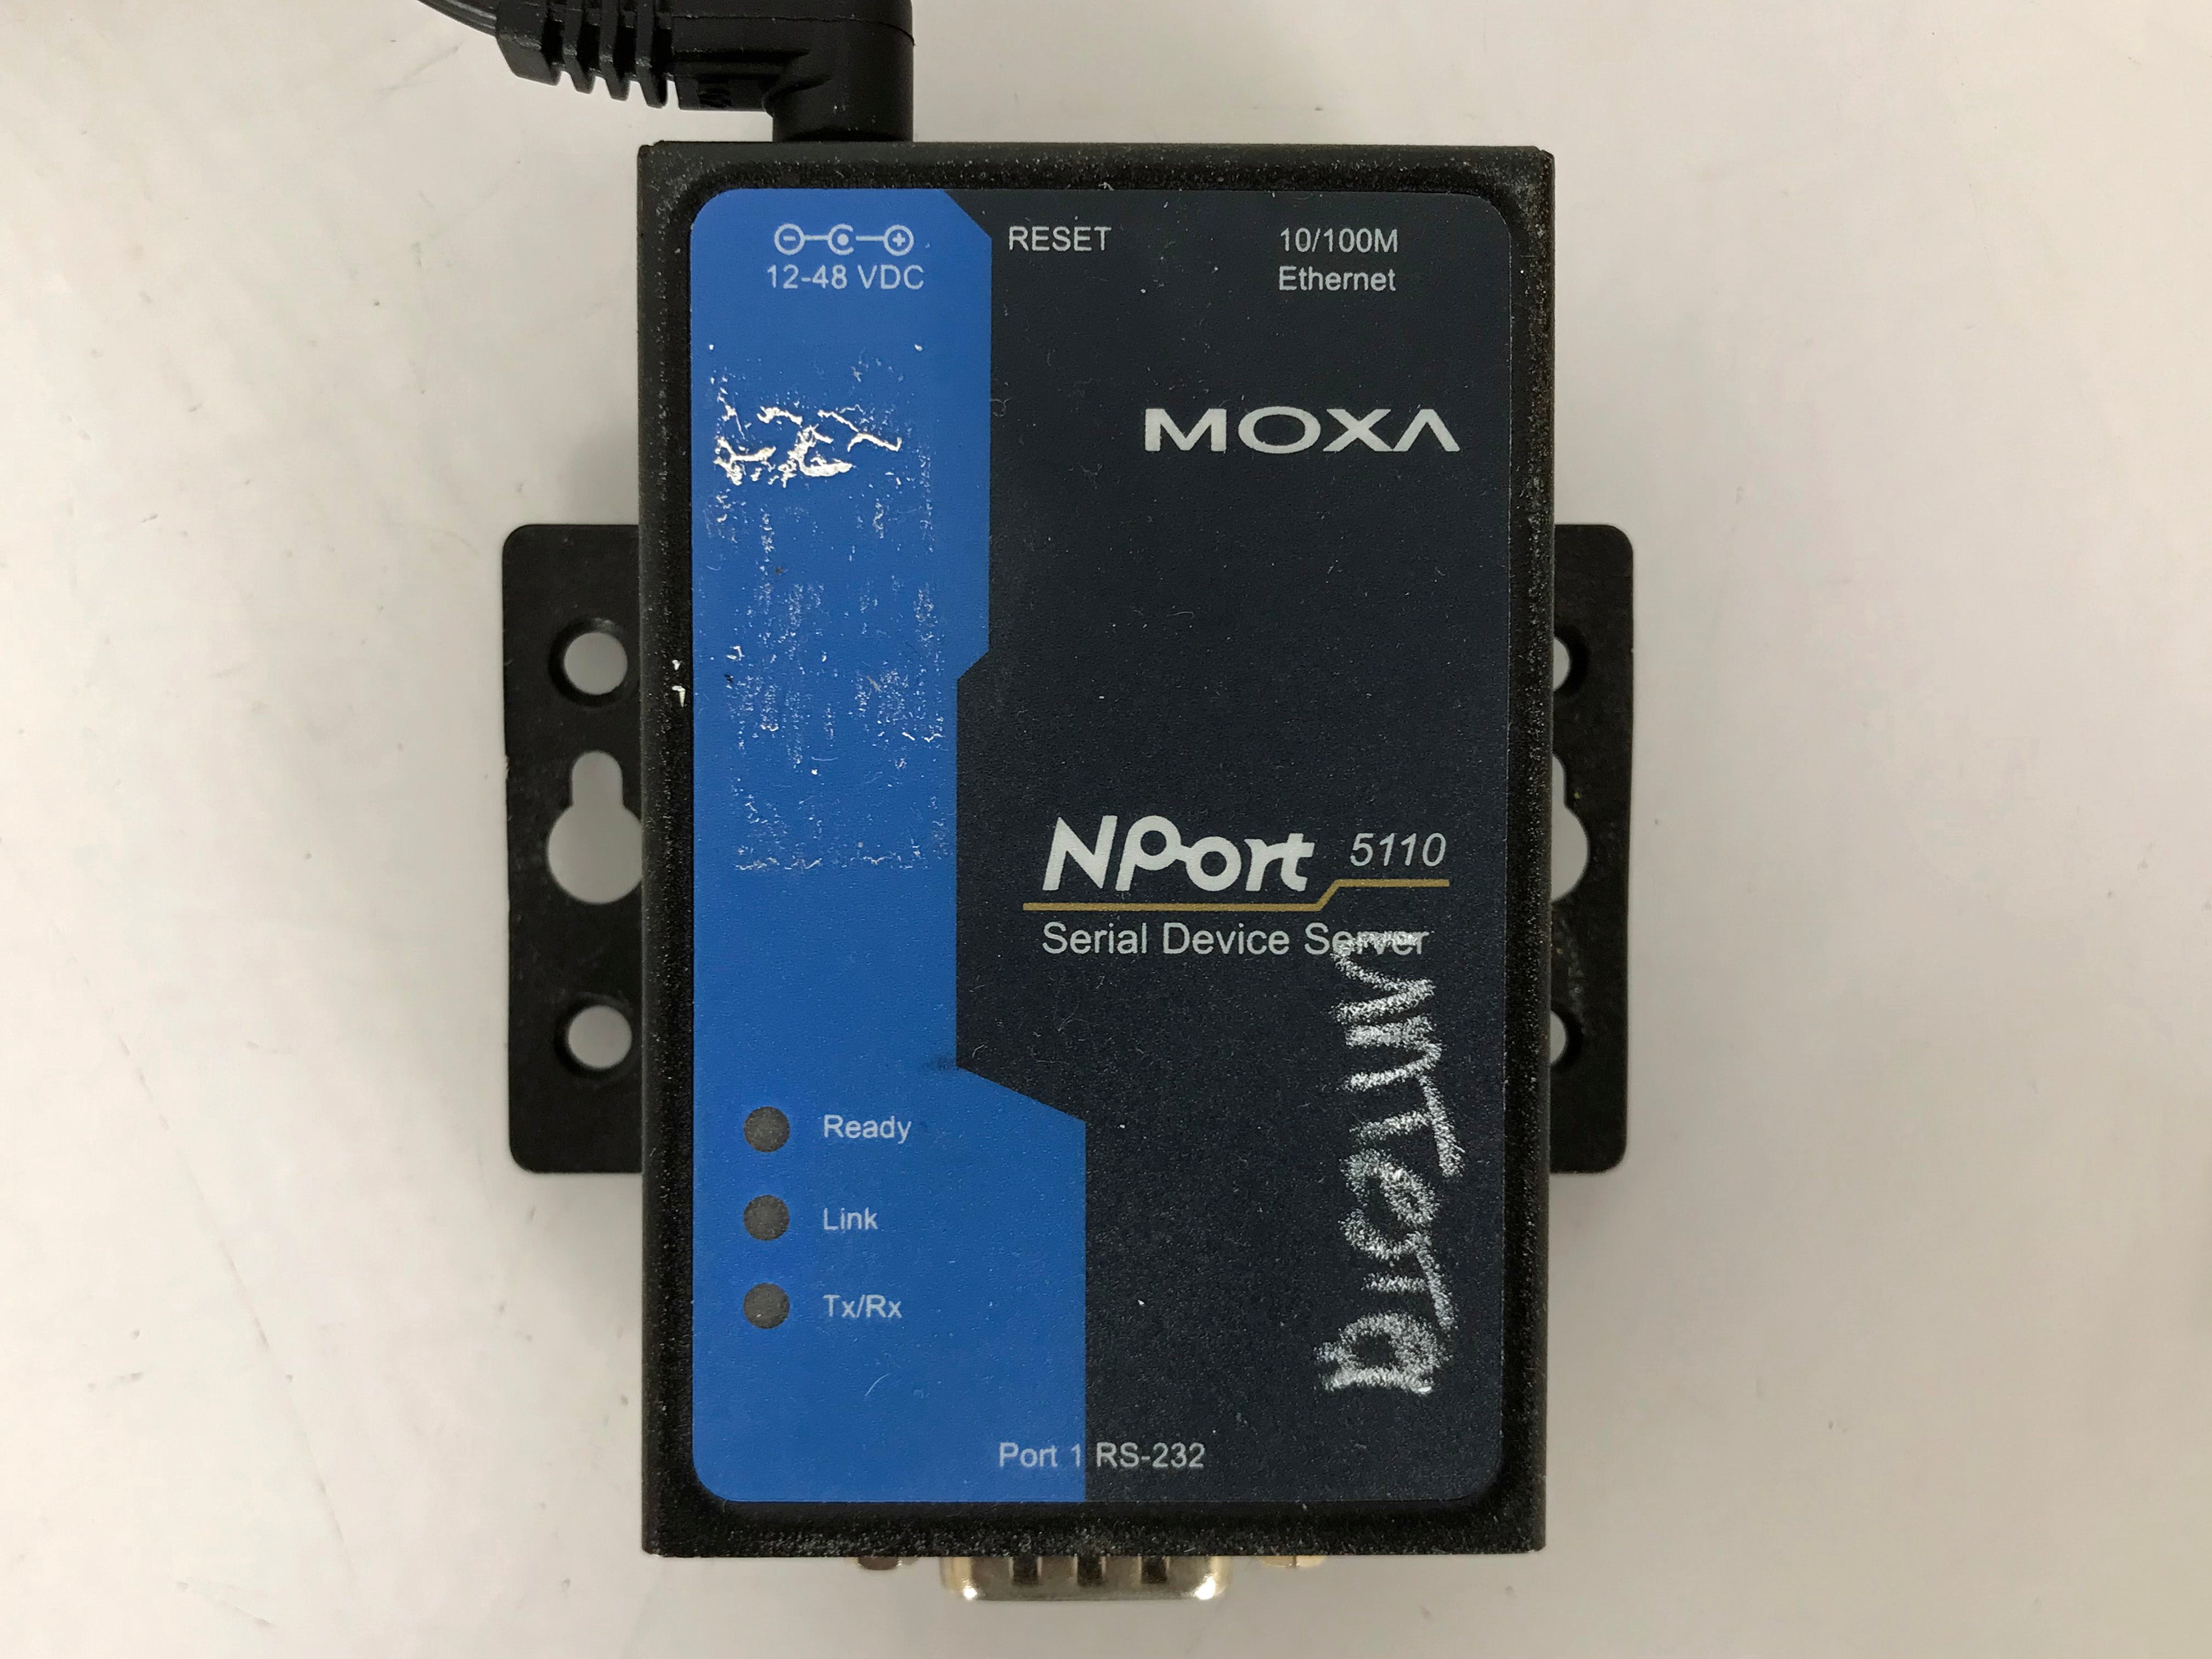 MOXA NPort 5110 Serial Device Server